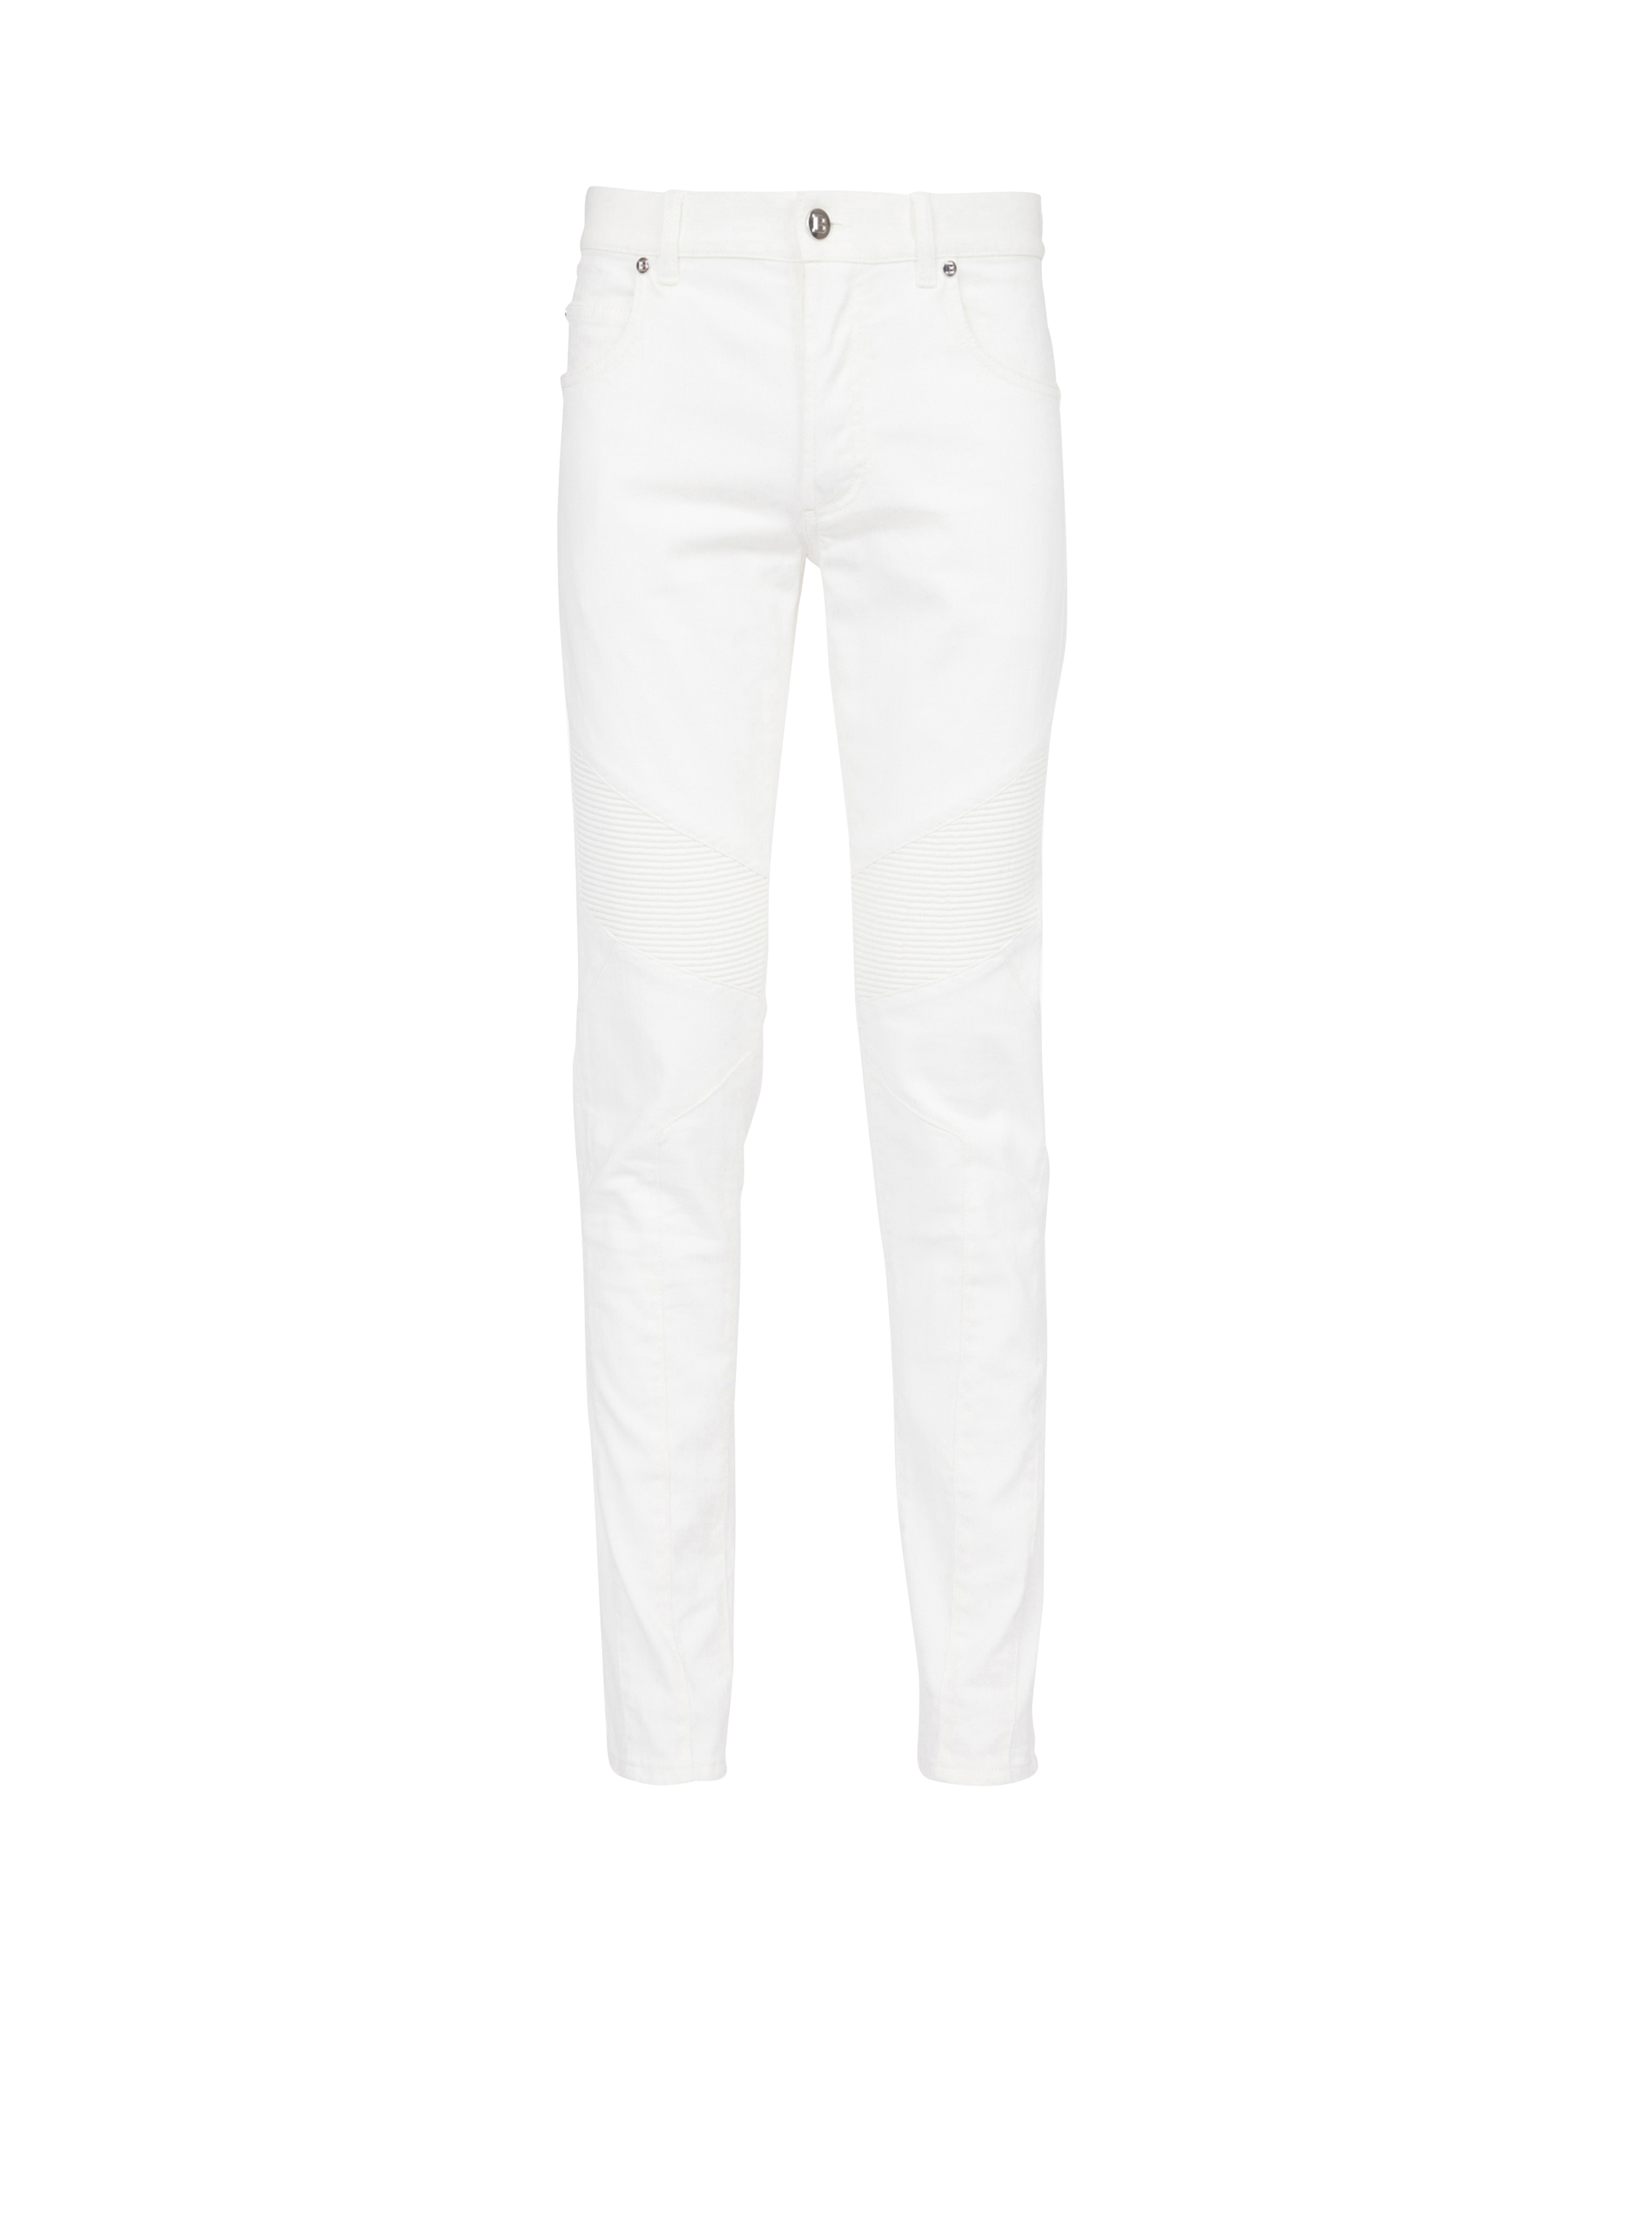 Slim cut cotton jeans, white